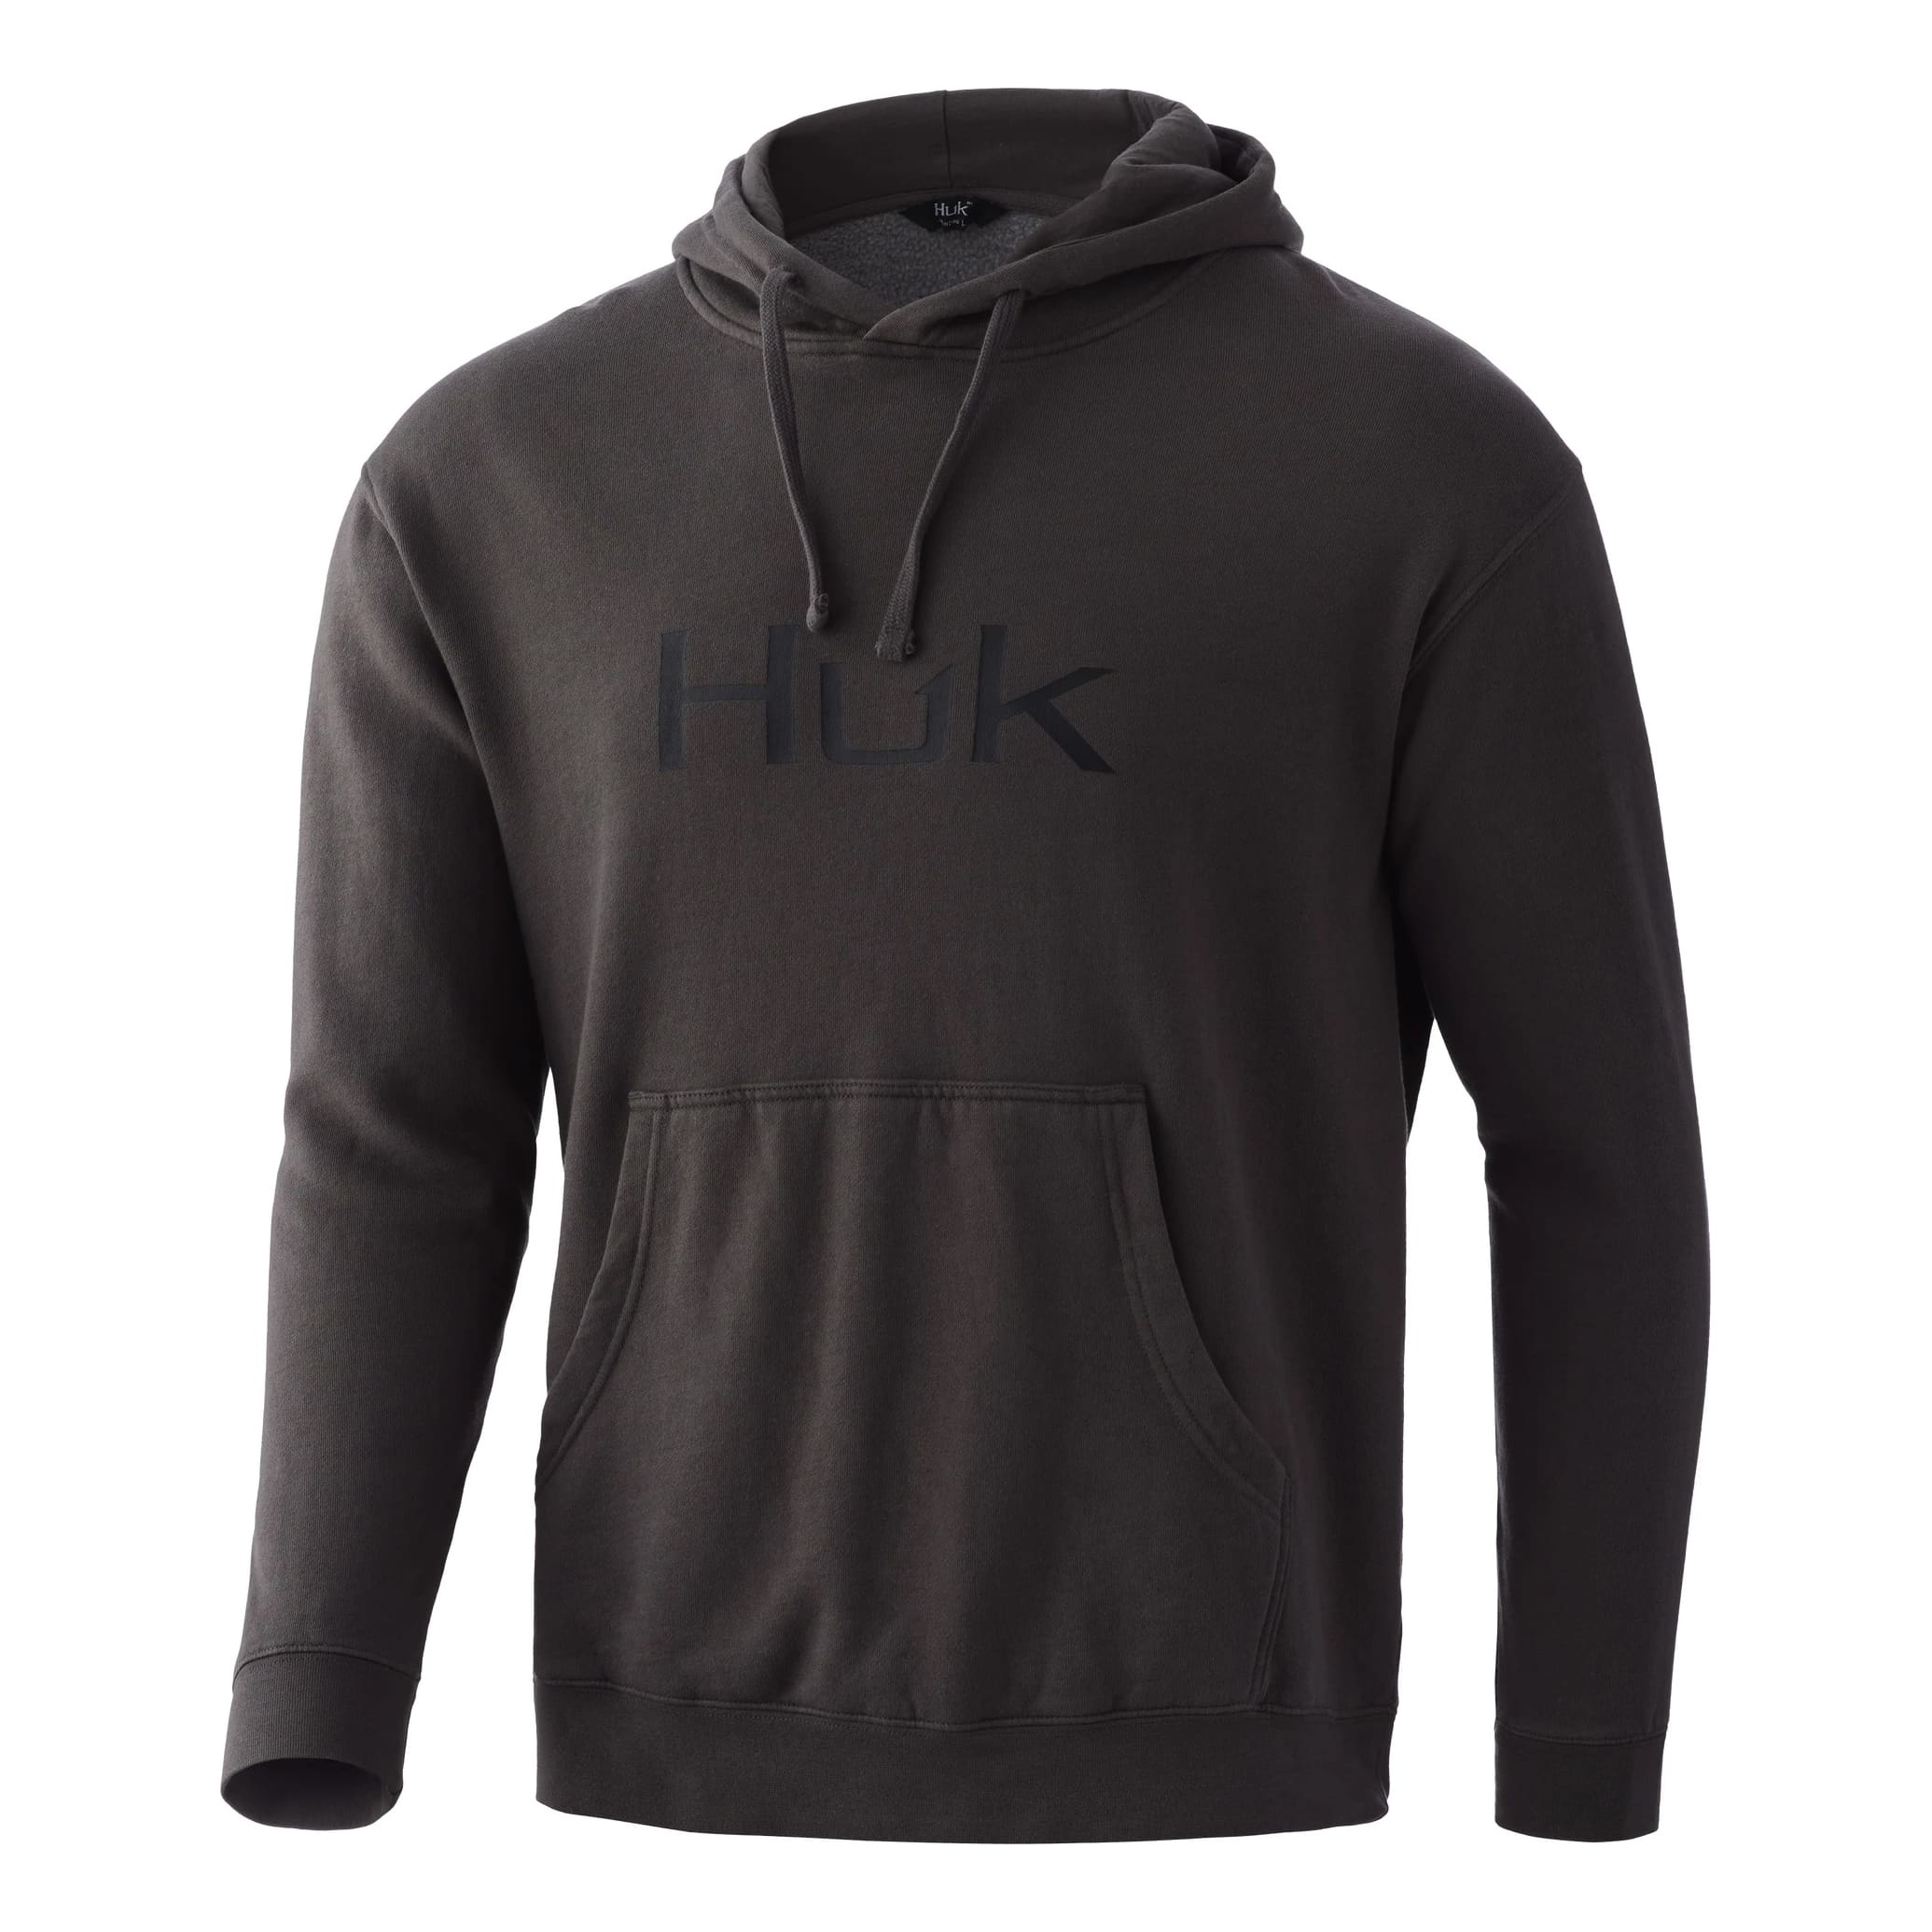 Huk Hoodies & Sweatshirts for Men for Sale, Shop Men's Athletic Clothes